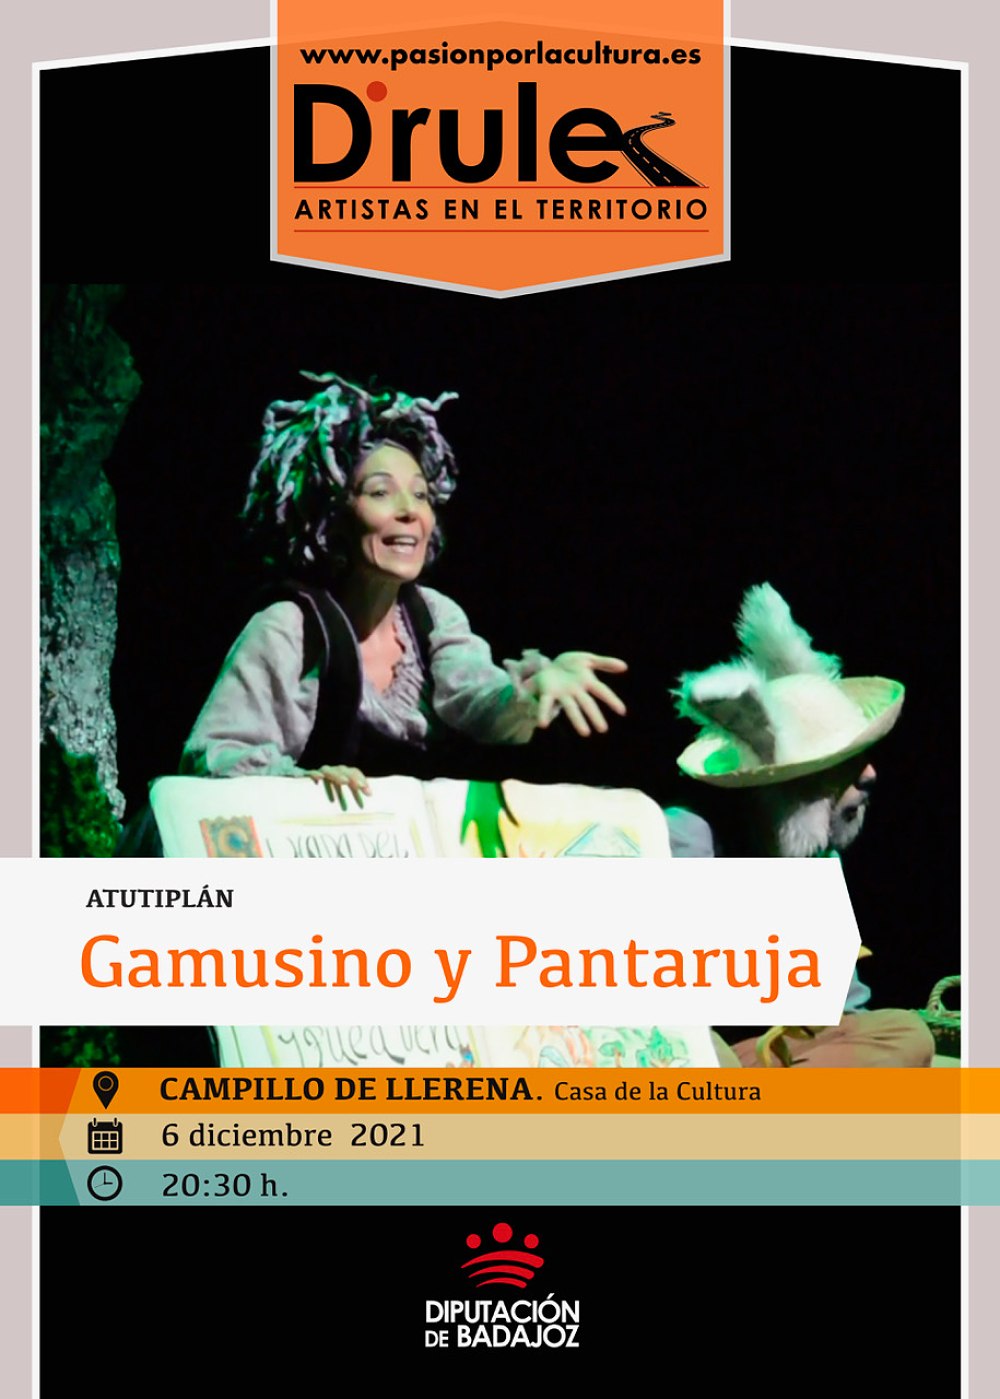 TEATRO | D'Rule 21: «Gamusino y Pantaruja», de Cía. Atutiplan